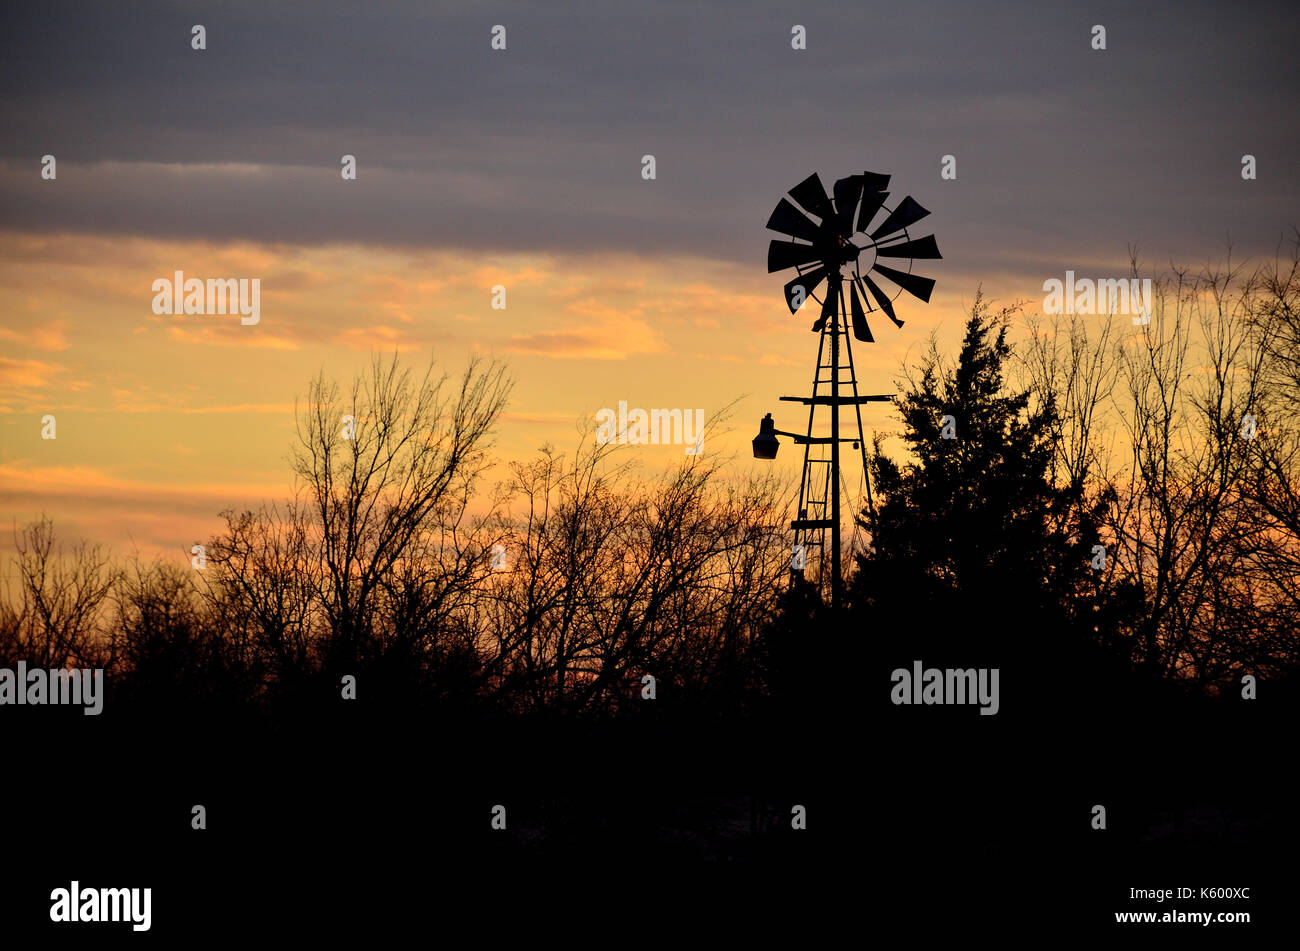 Alte Windmühle in Silhouette gegen einen Oklahoma Himmel bei Sonnenuntergang. Stockfoto